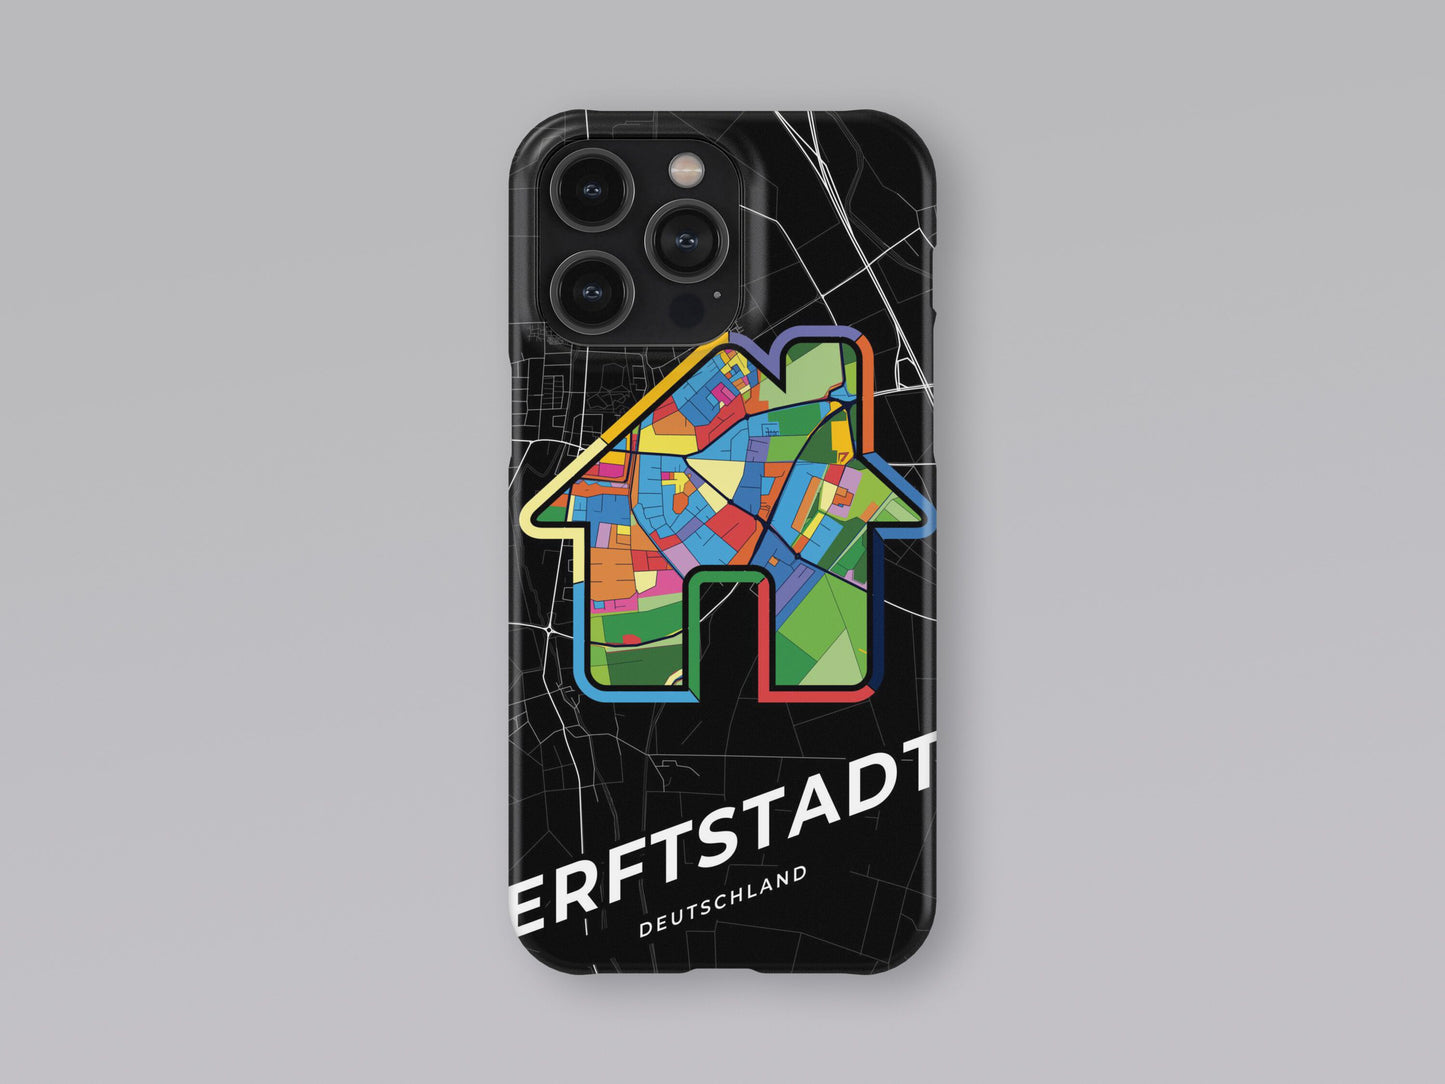 Erftstadt Deutschland slim phone case with colorful icon. Birthday, wedding or housewarming gift. Couple match cases. 3